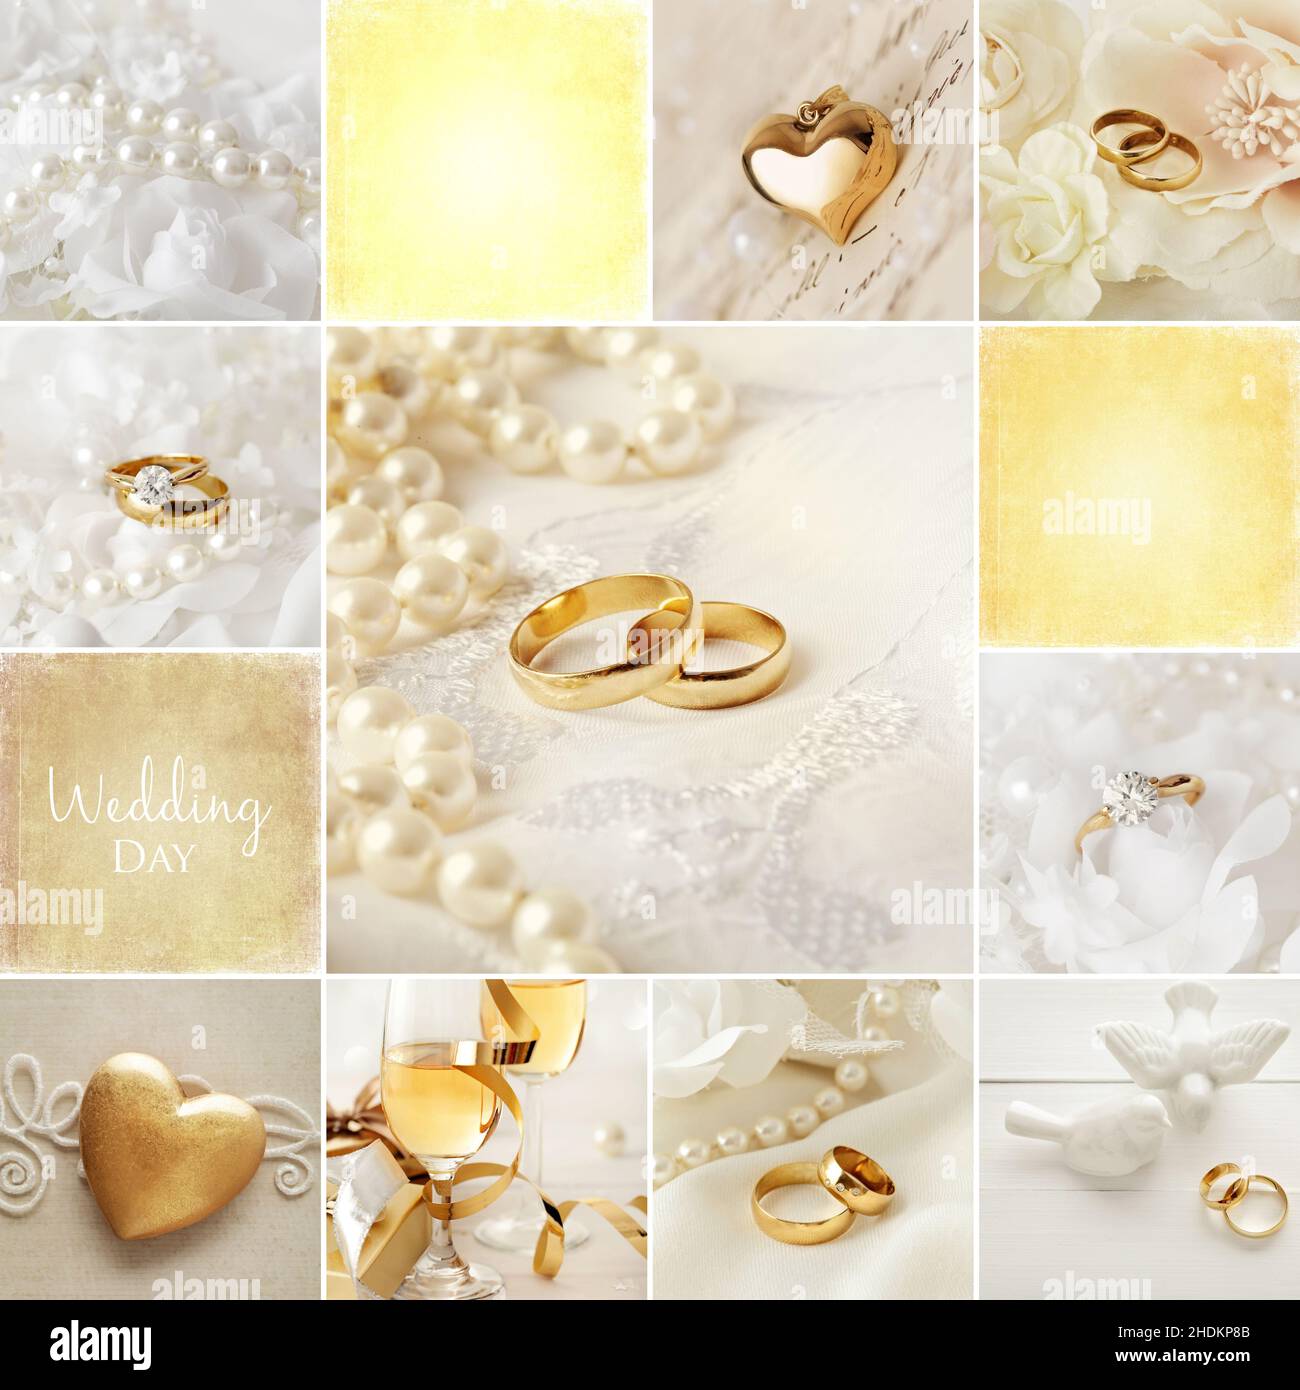 Aniversarios bodas de diamante fotografías e imágenes de alta resolución -  Alamy